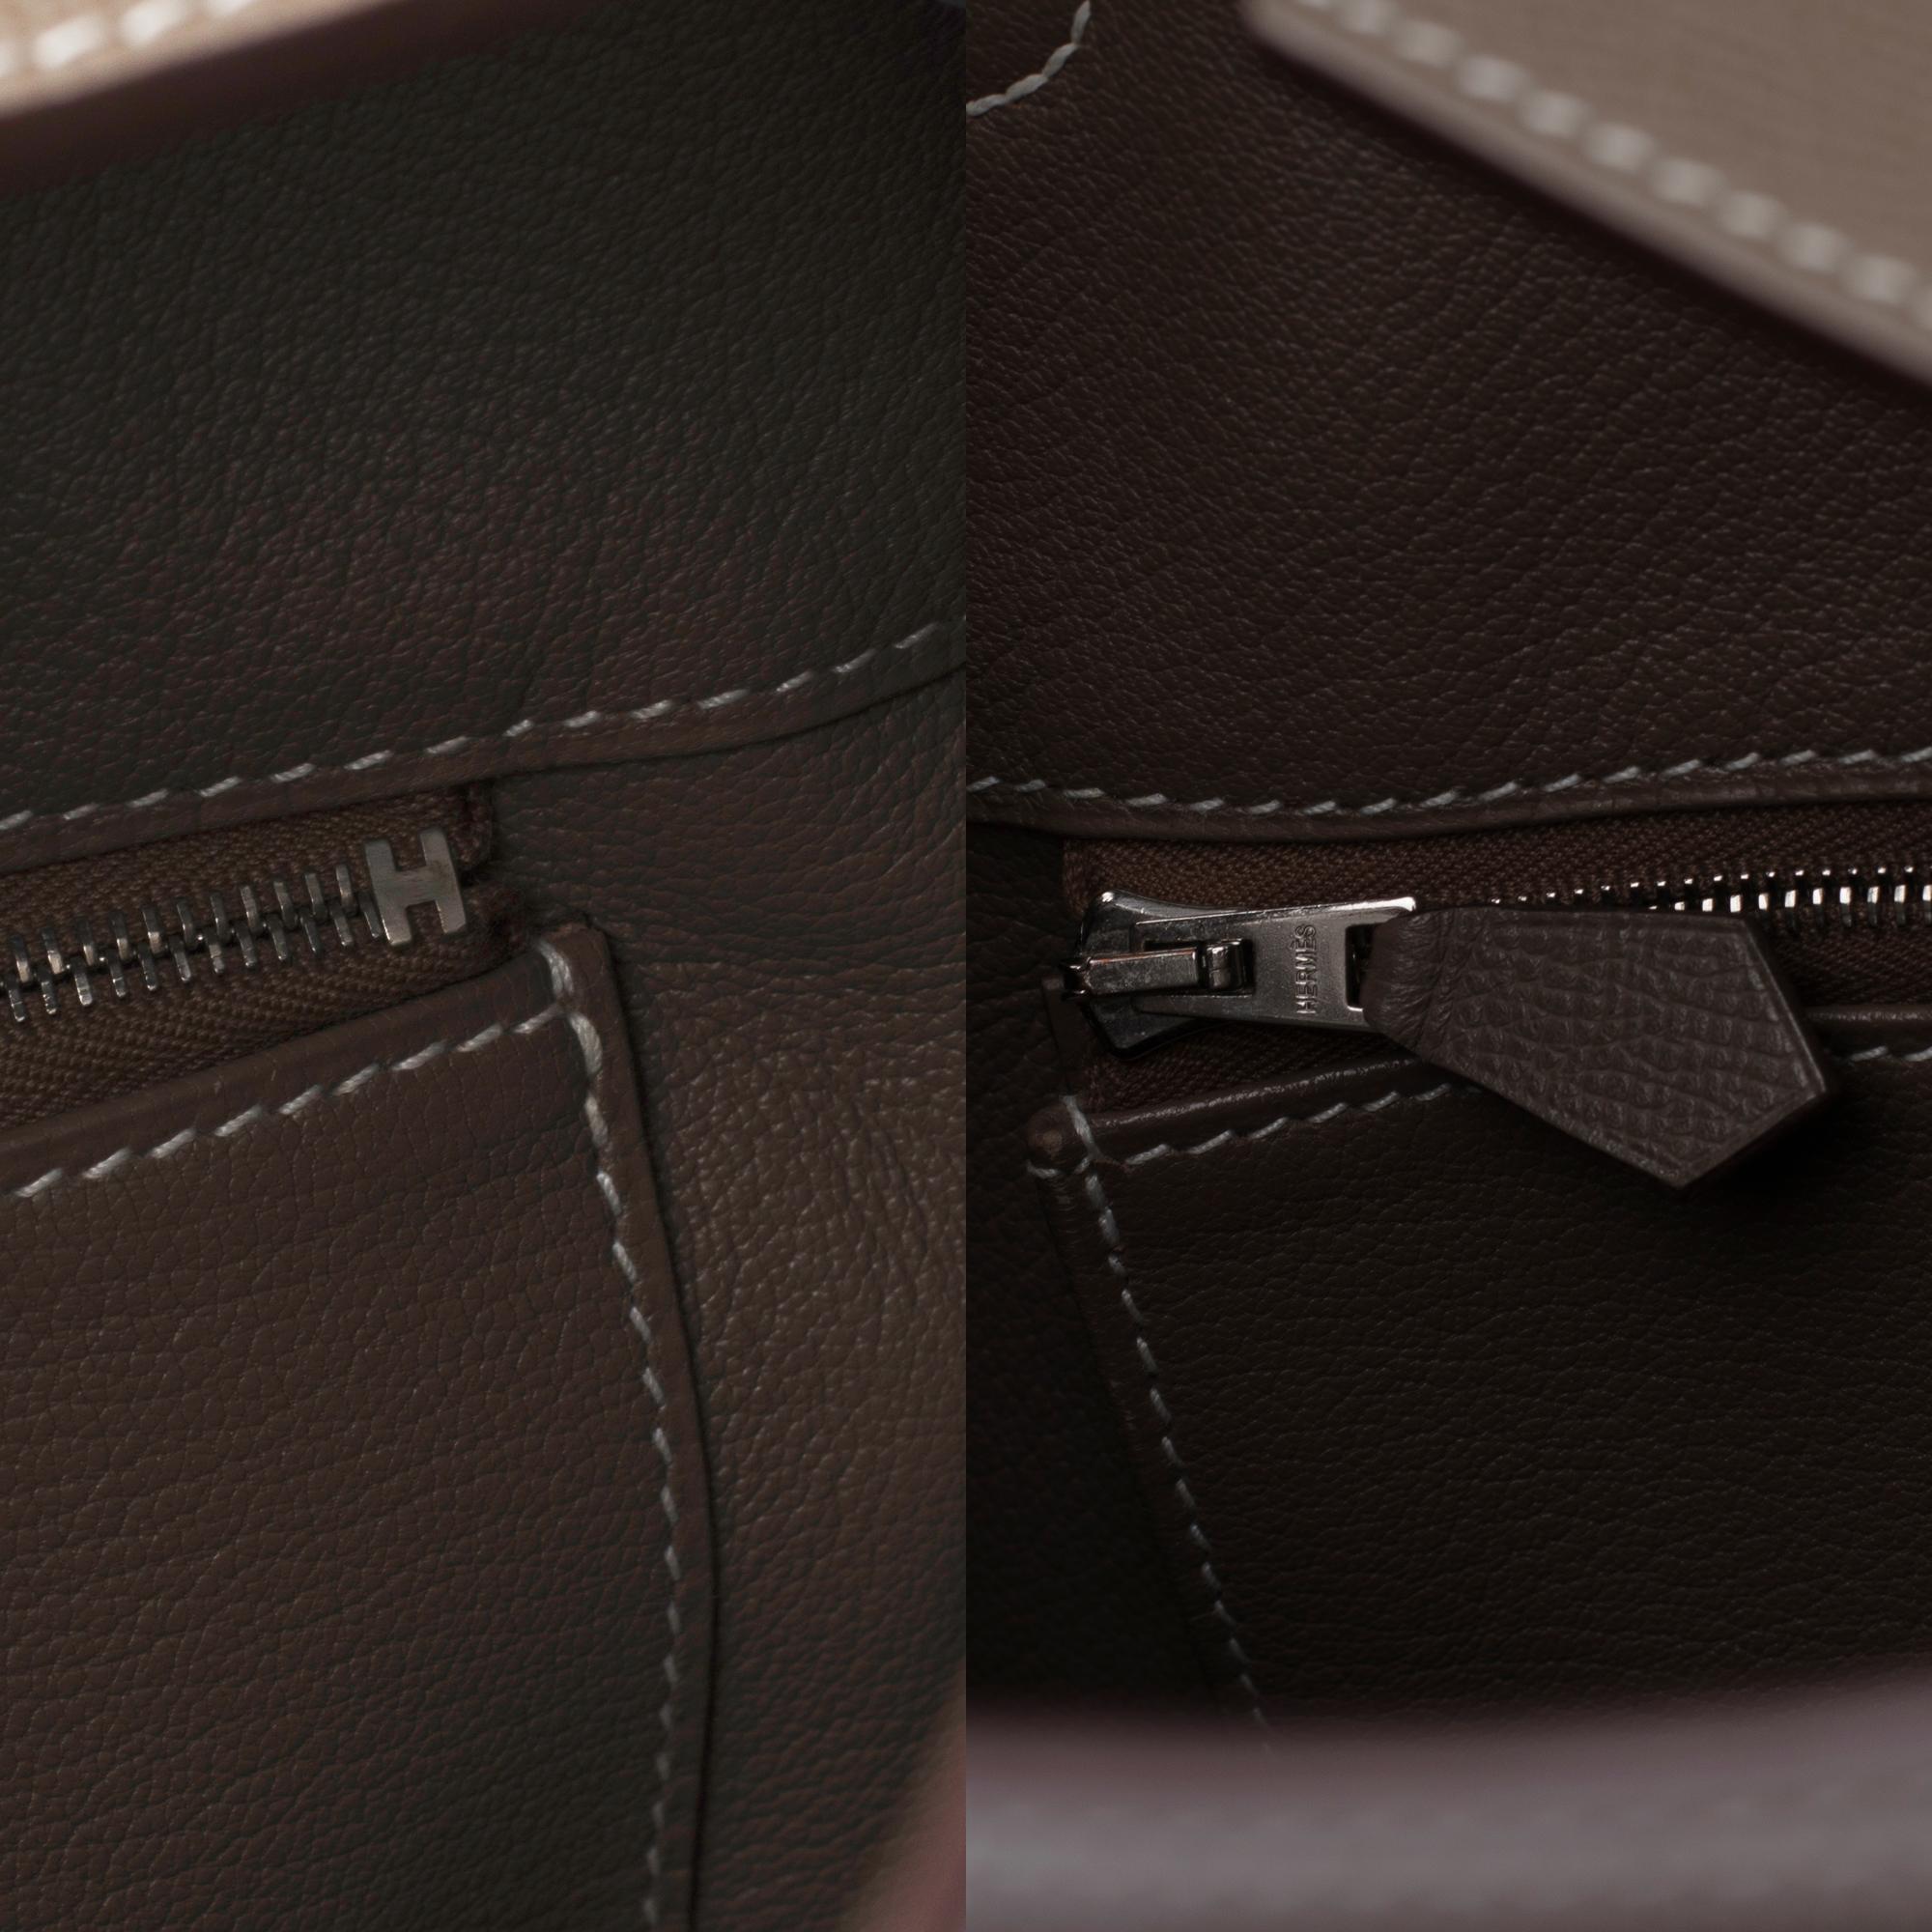 Stunning Hermes Birkin 40cm handbag in Brown Togo leather with gold hardware 2